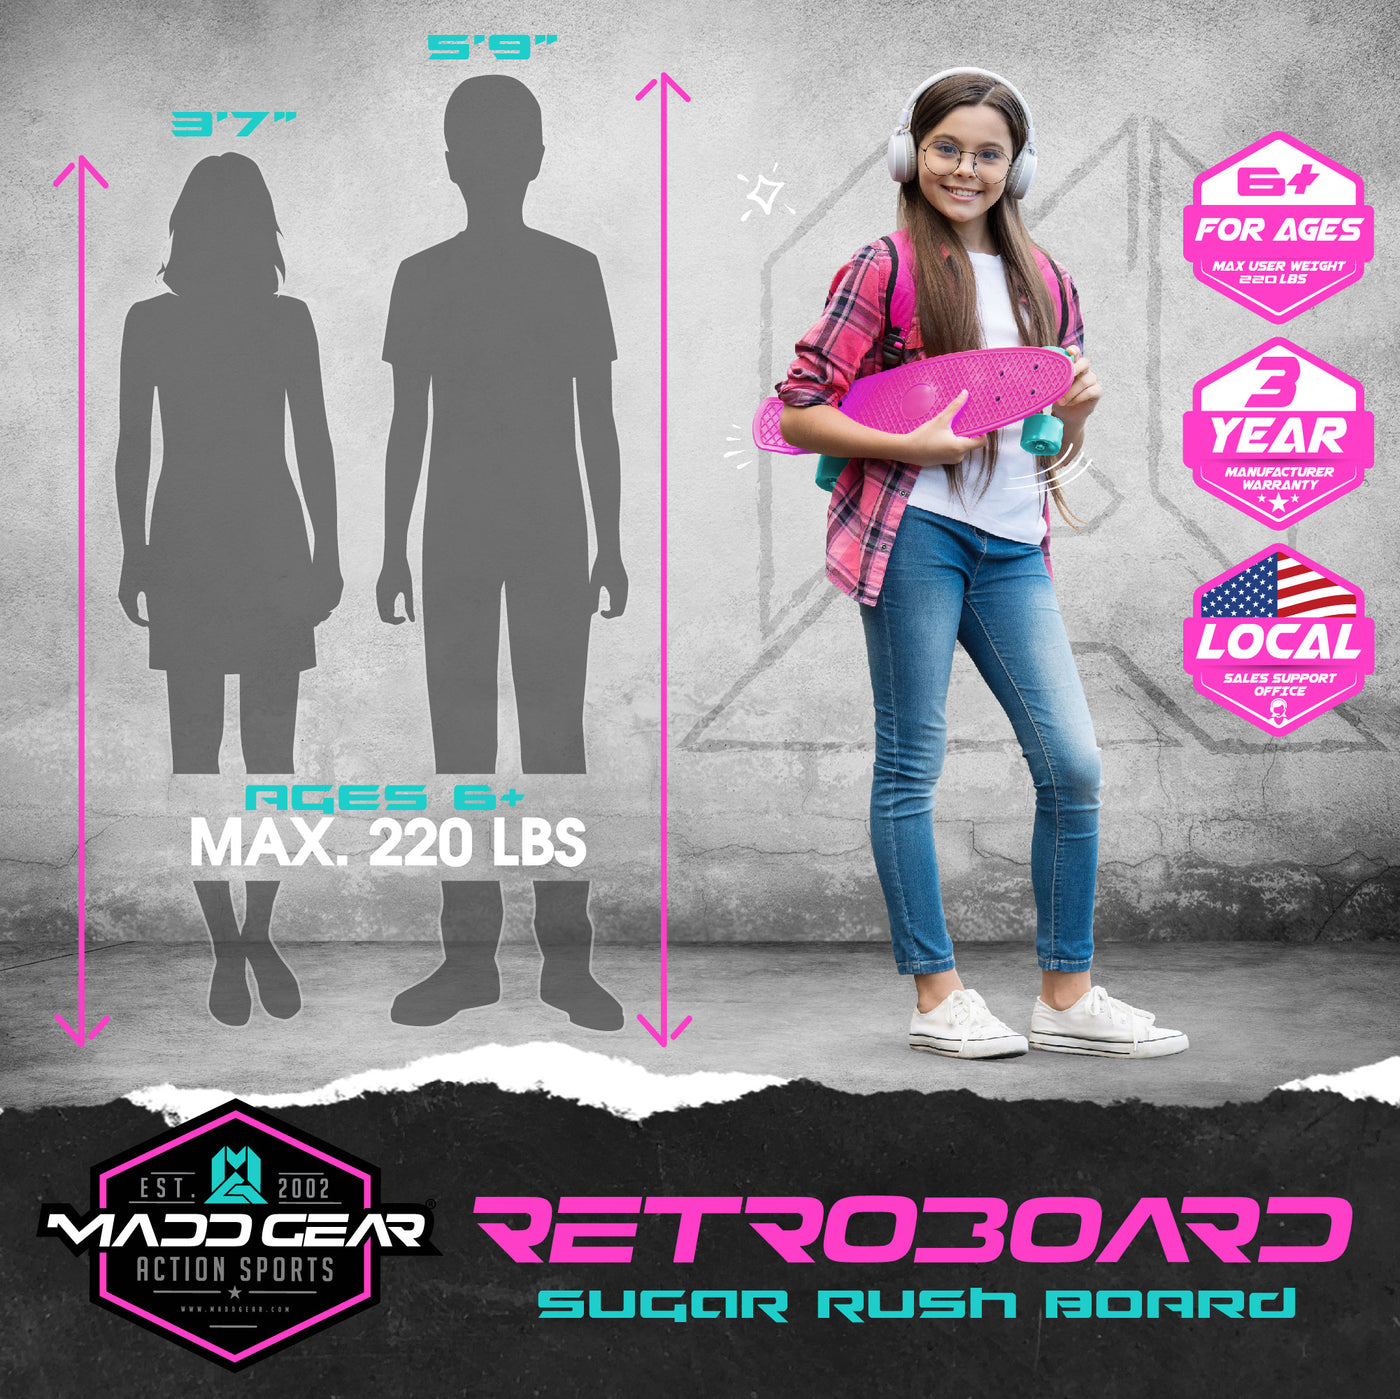 Madd Gear Retro Board Skateboard Penny 22" Plastic Flexible Kids Children Complete High Quality Pink Compact Skateboard